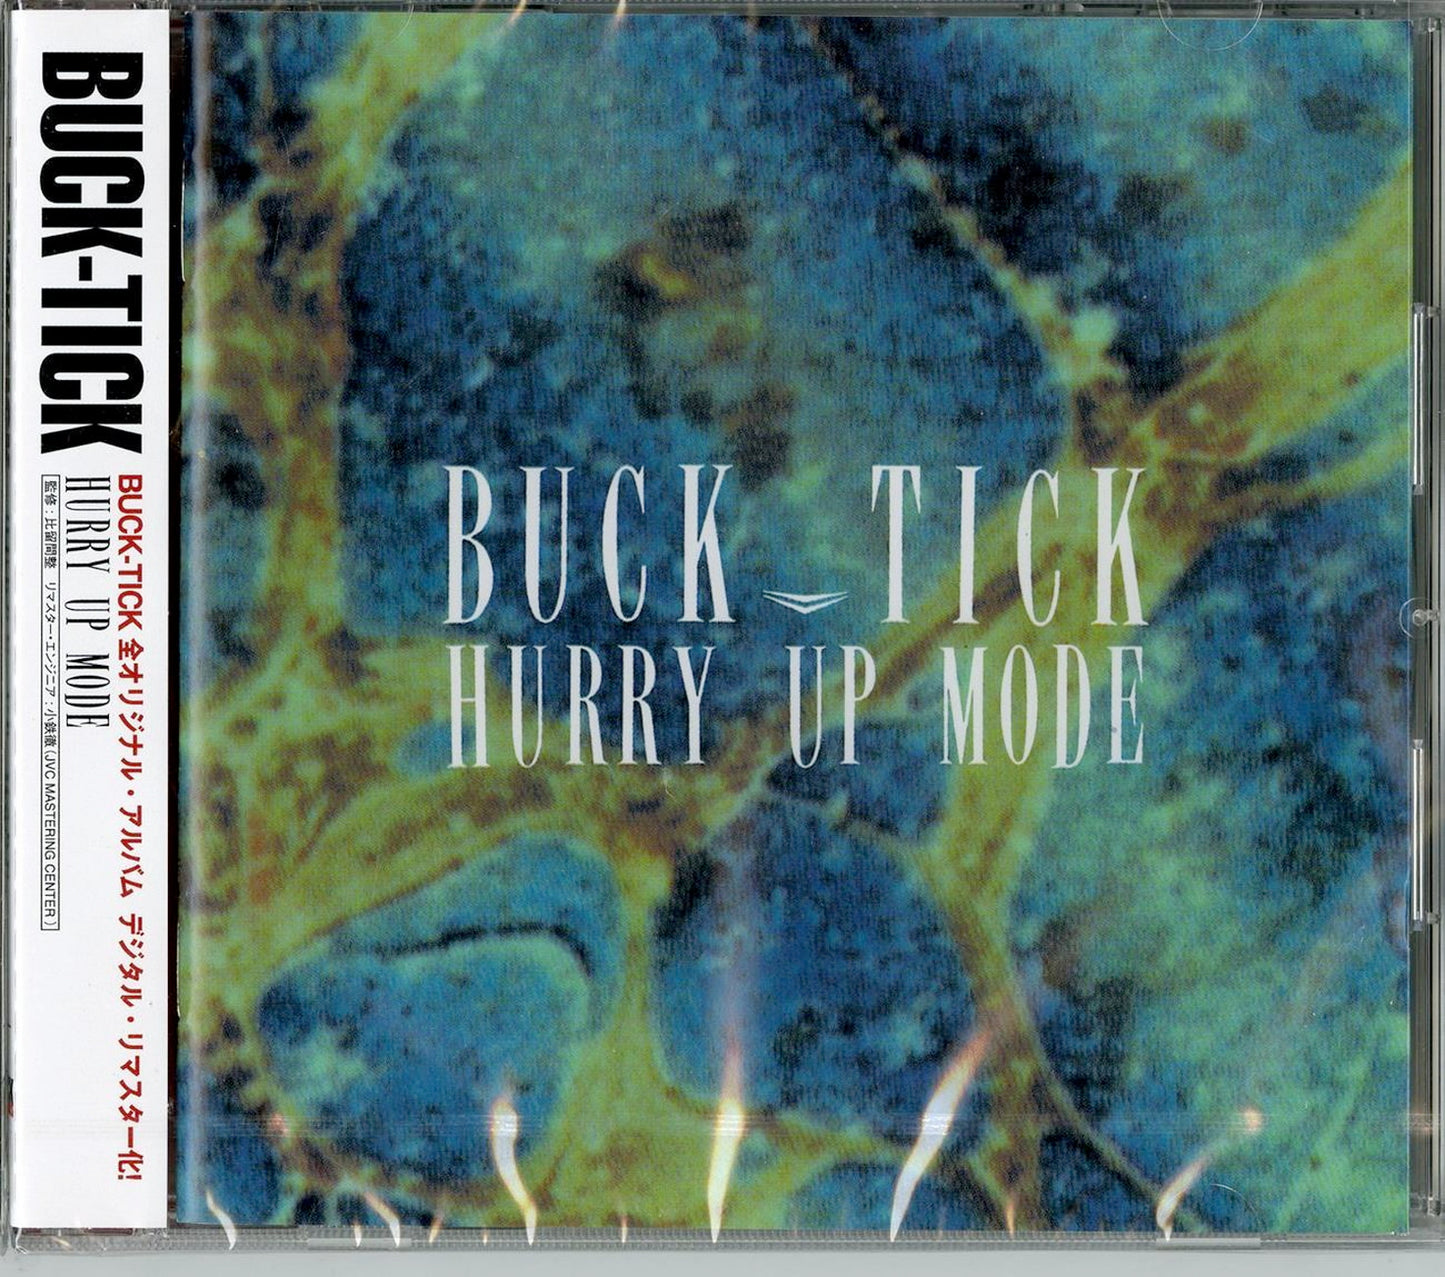 Buck-Tick - Hurry Up Mode - Japan  CD